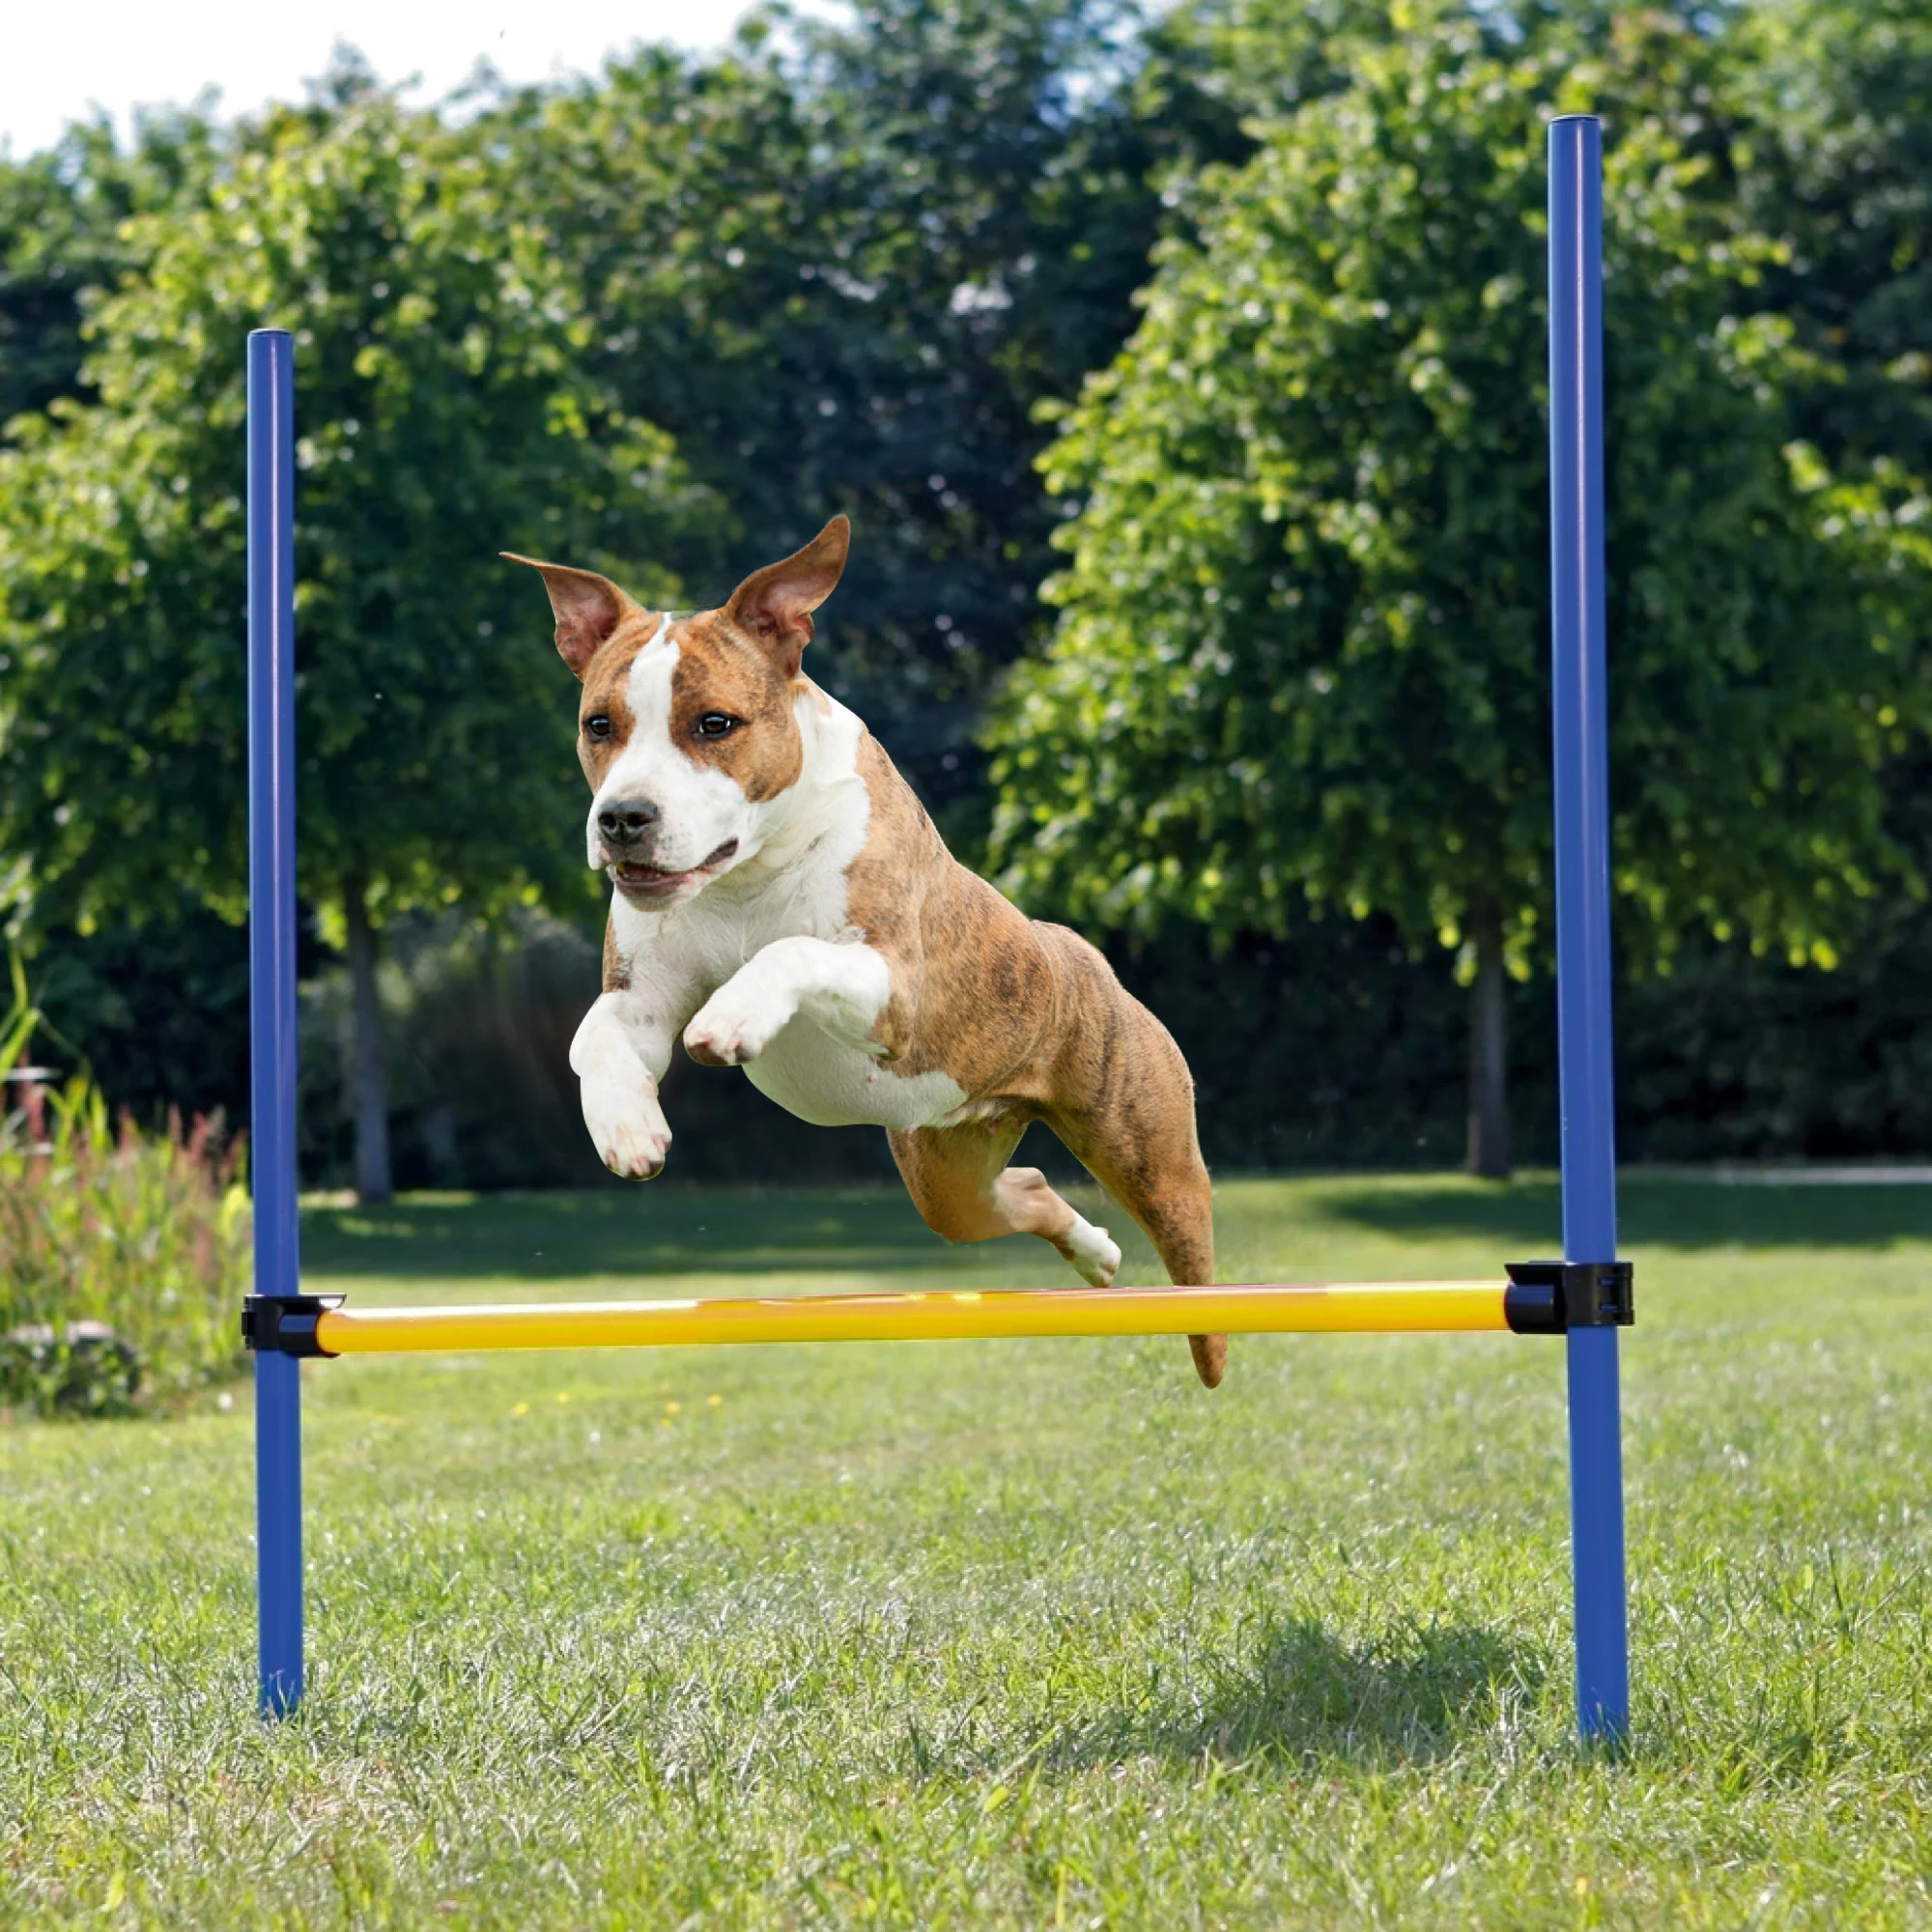 pawise宠物狗户外游戏敏捷运动训练可调节身高跳跨栏训练器材为狗